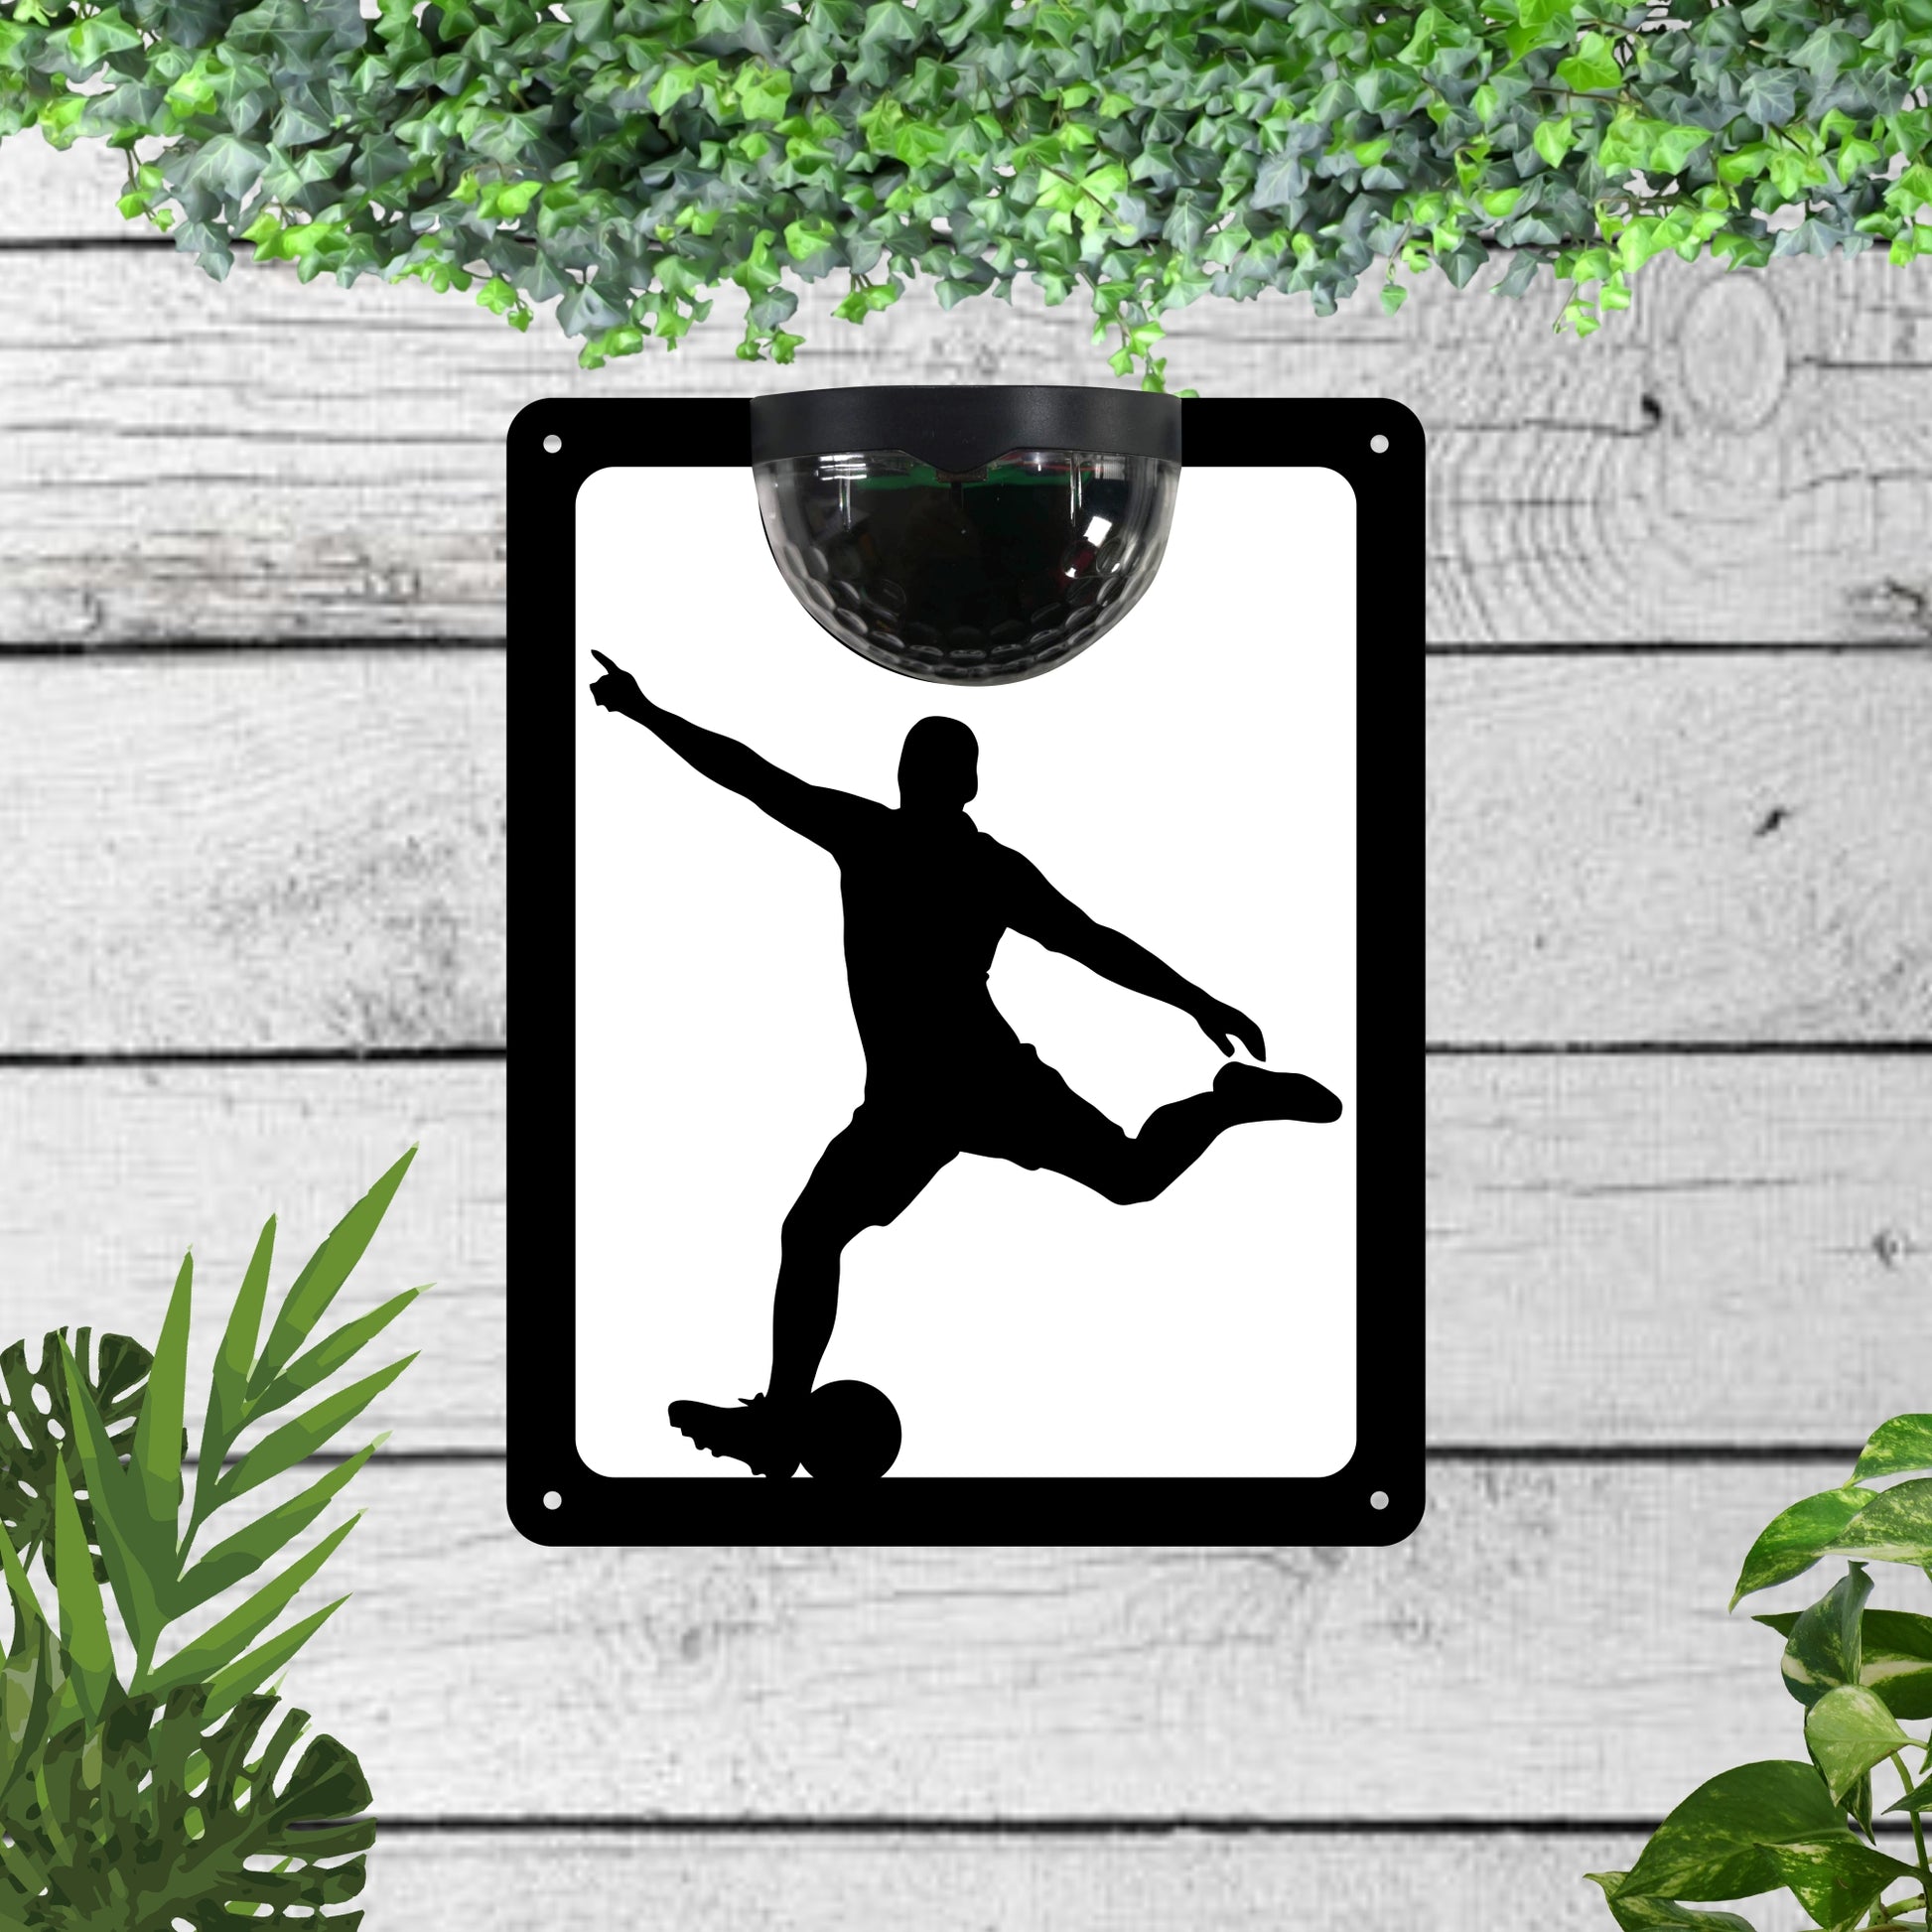 Garden solar wall plaque featuring a Football player | John Alans